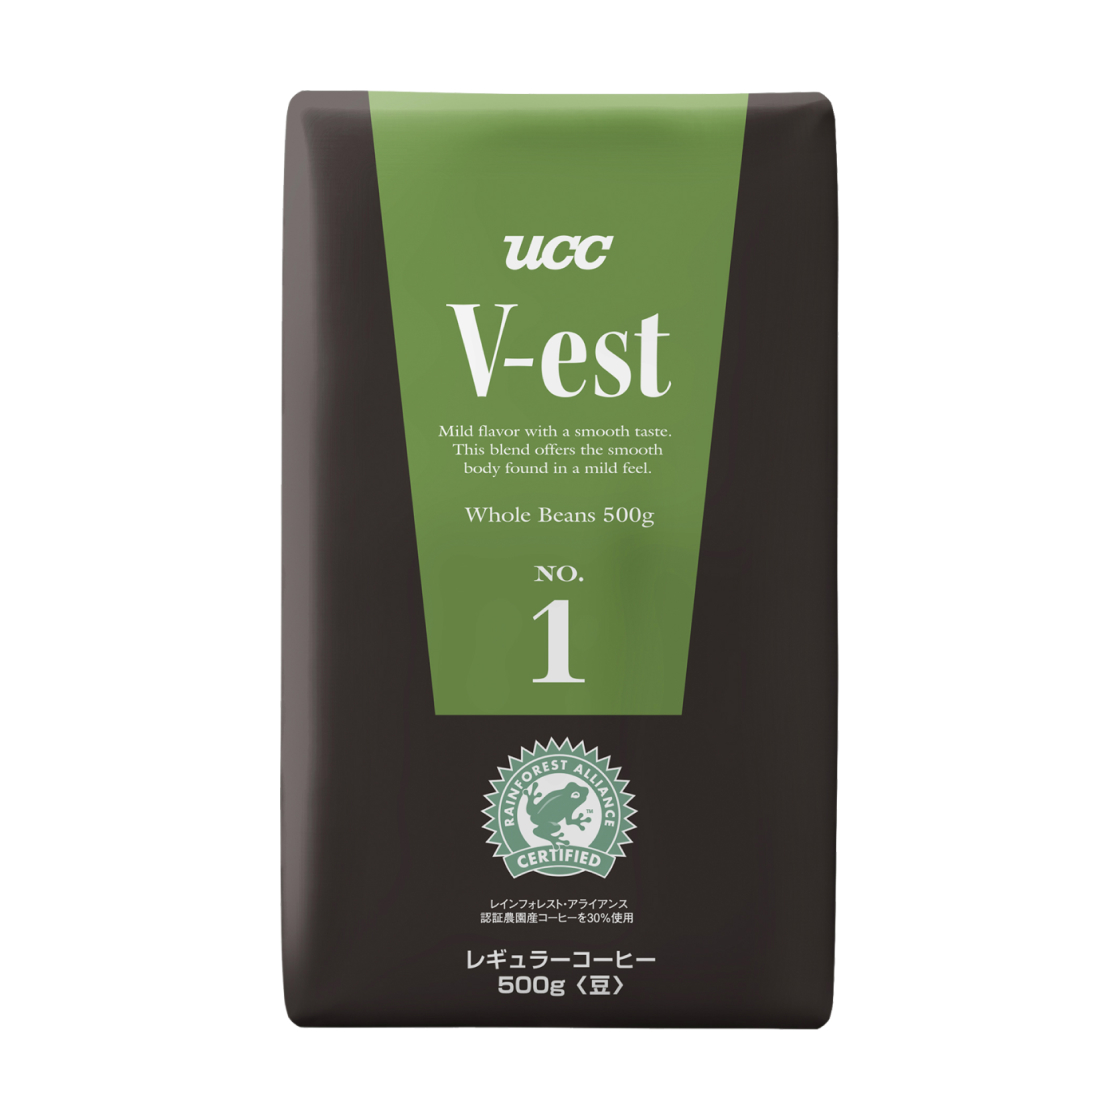 V-est | 業務用コーヒー | UCCコーヒープロフェッショナル株式会社